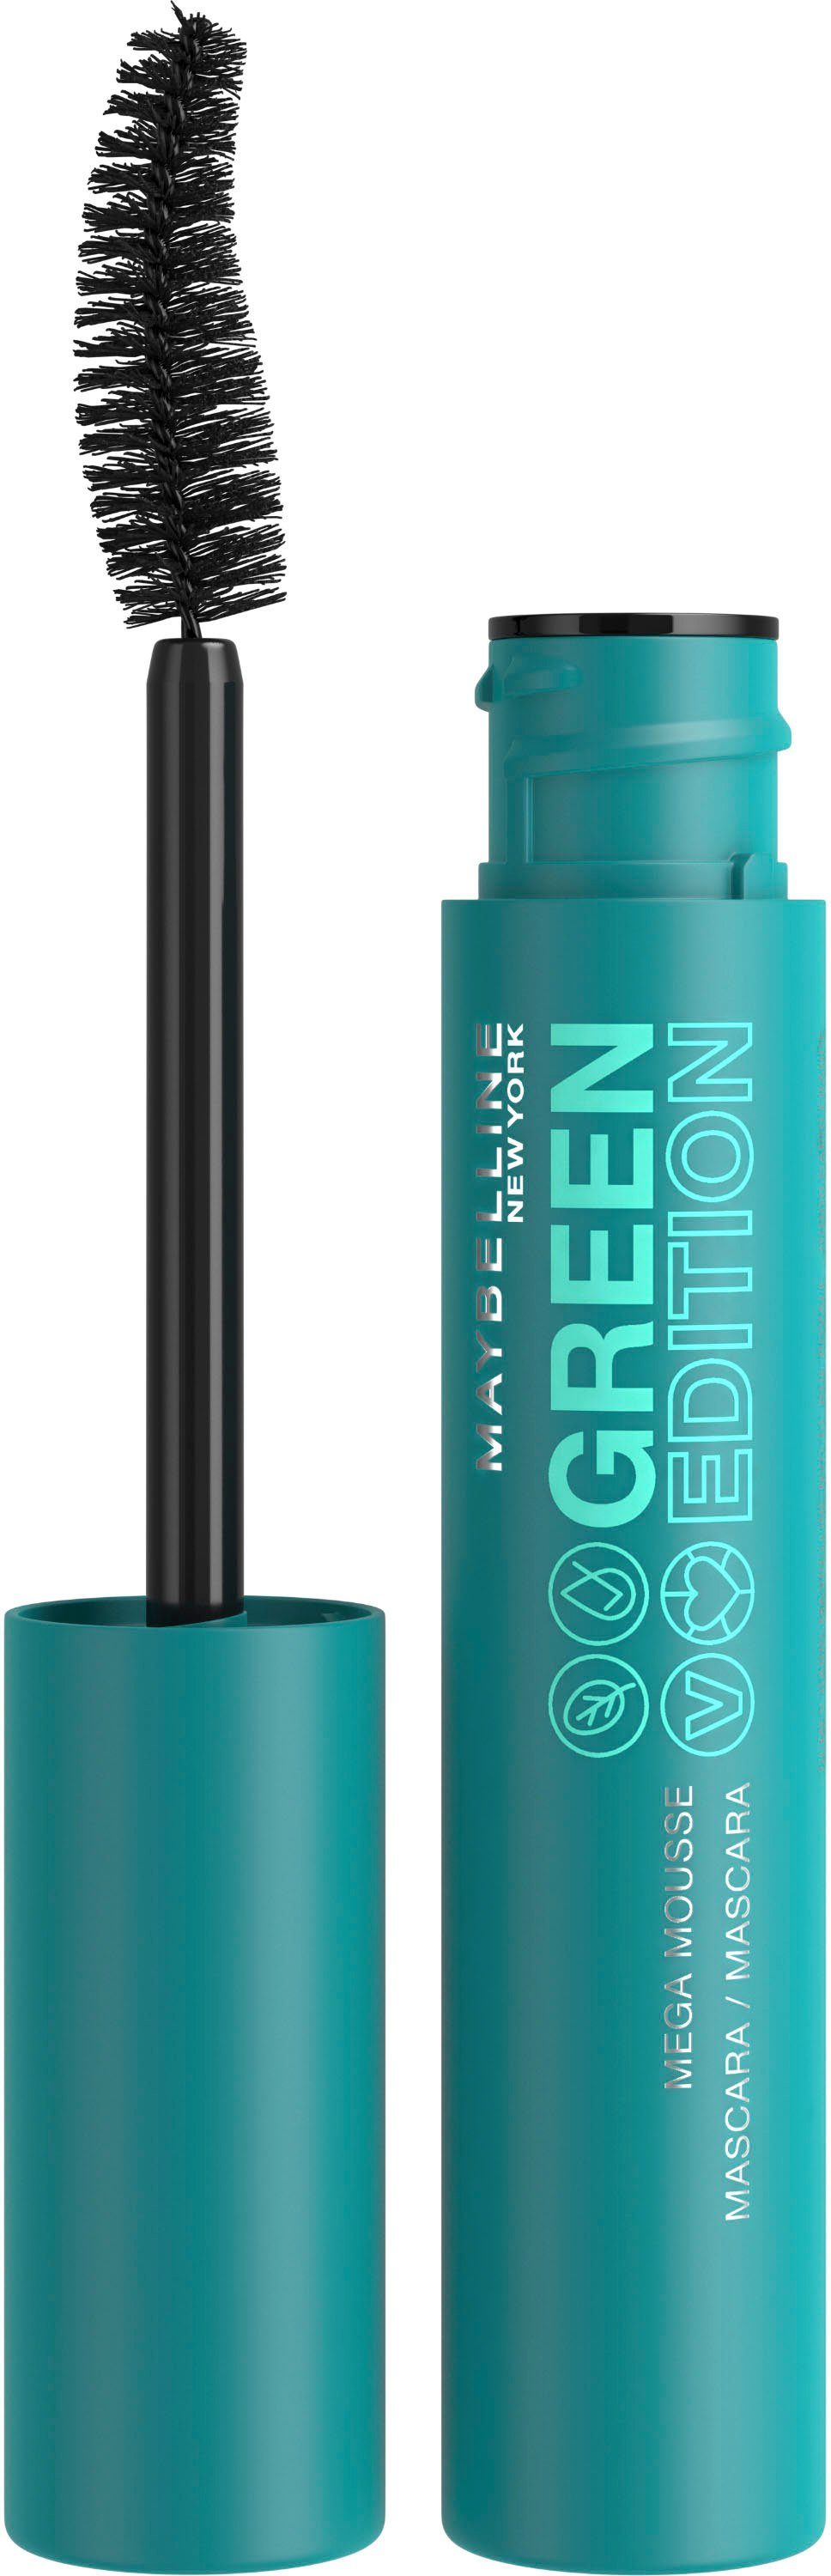 Green NEW Mousse 001 schwarz Edition Mega Mascara Mascara MAYBELLINE YORK WSH